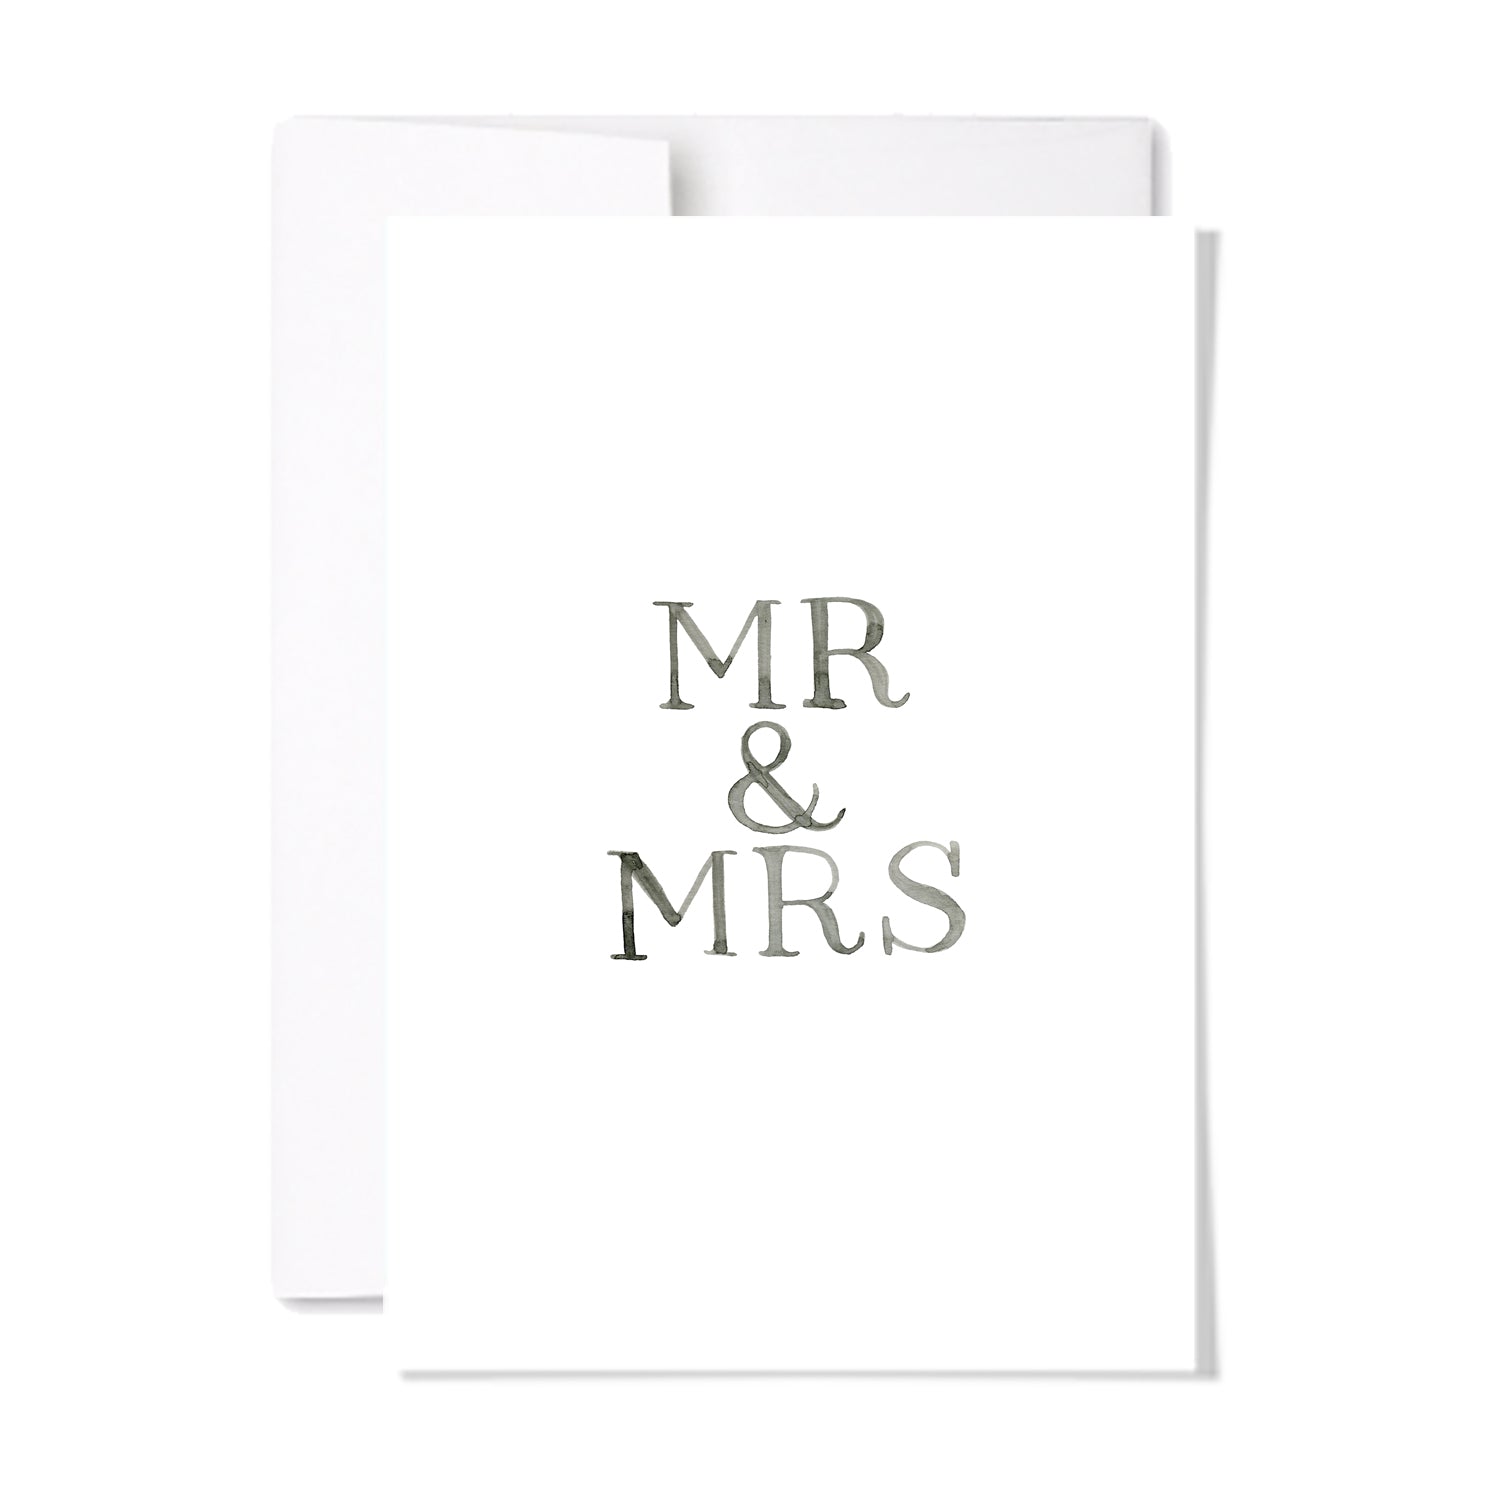 Mr & Mrs Card